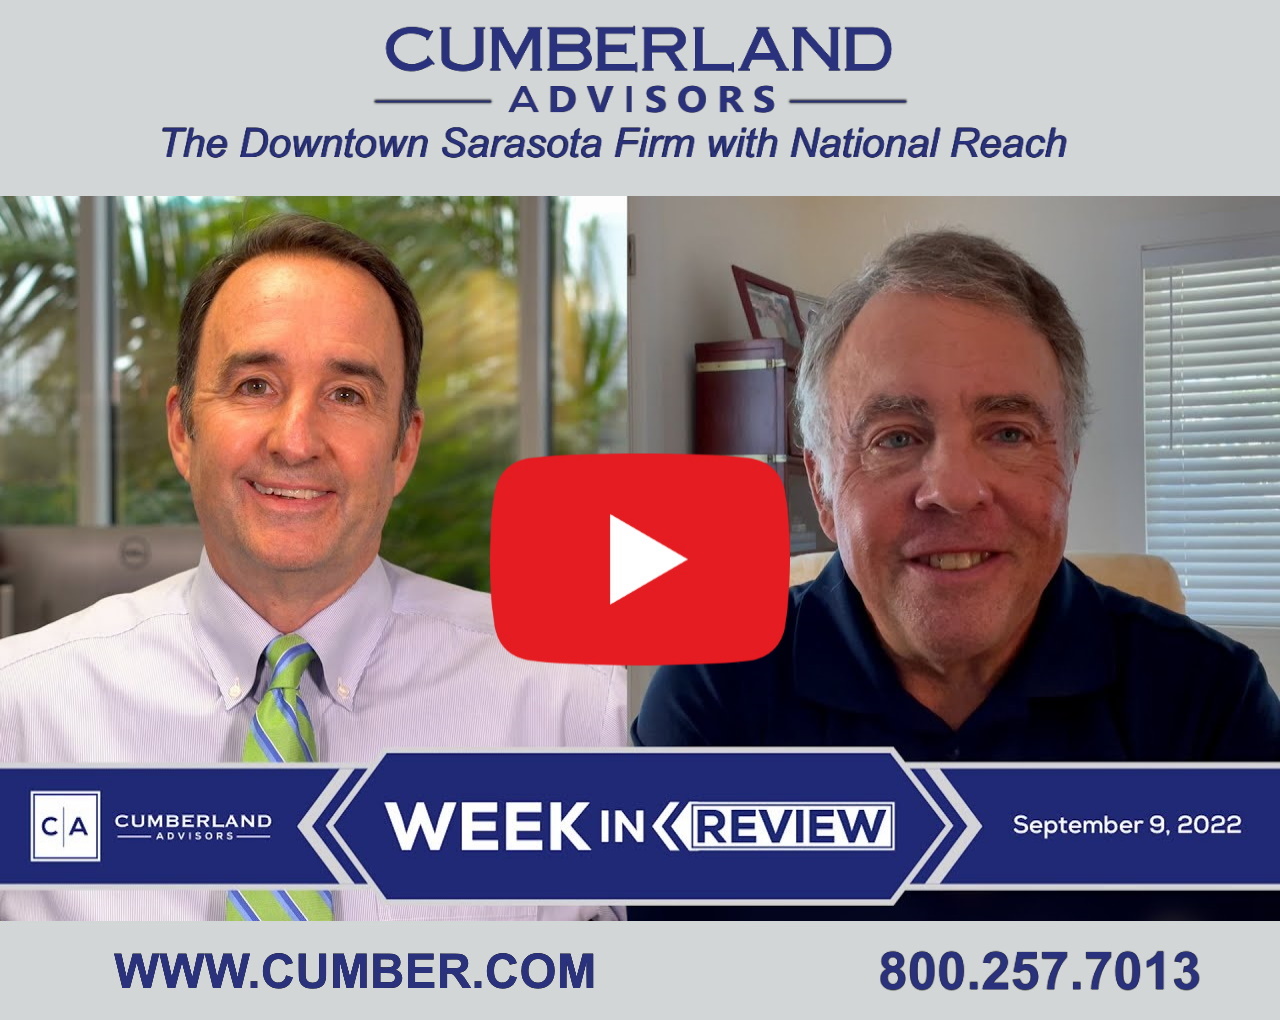 Cumberland Advisors’ Friday, September 09, 2022 Week in Review